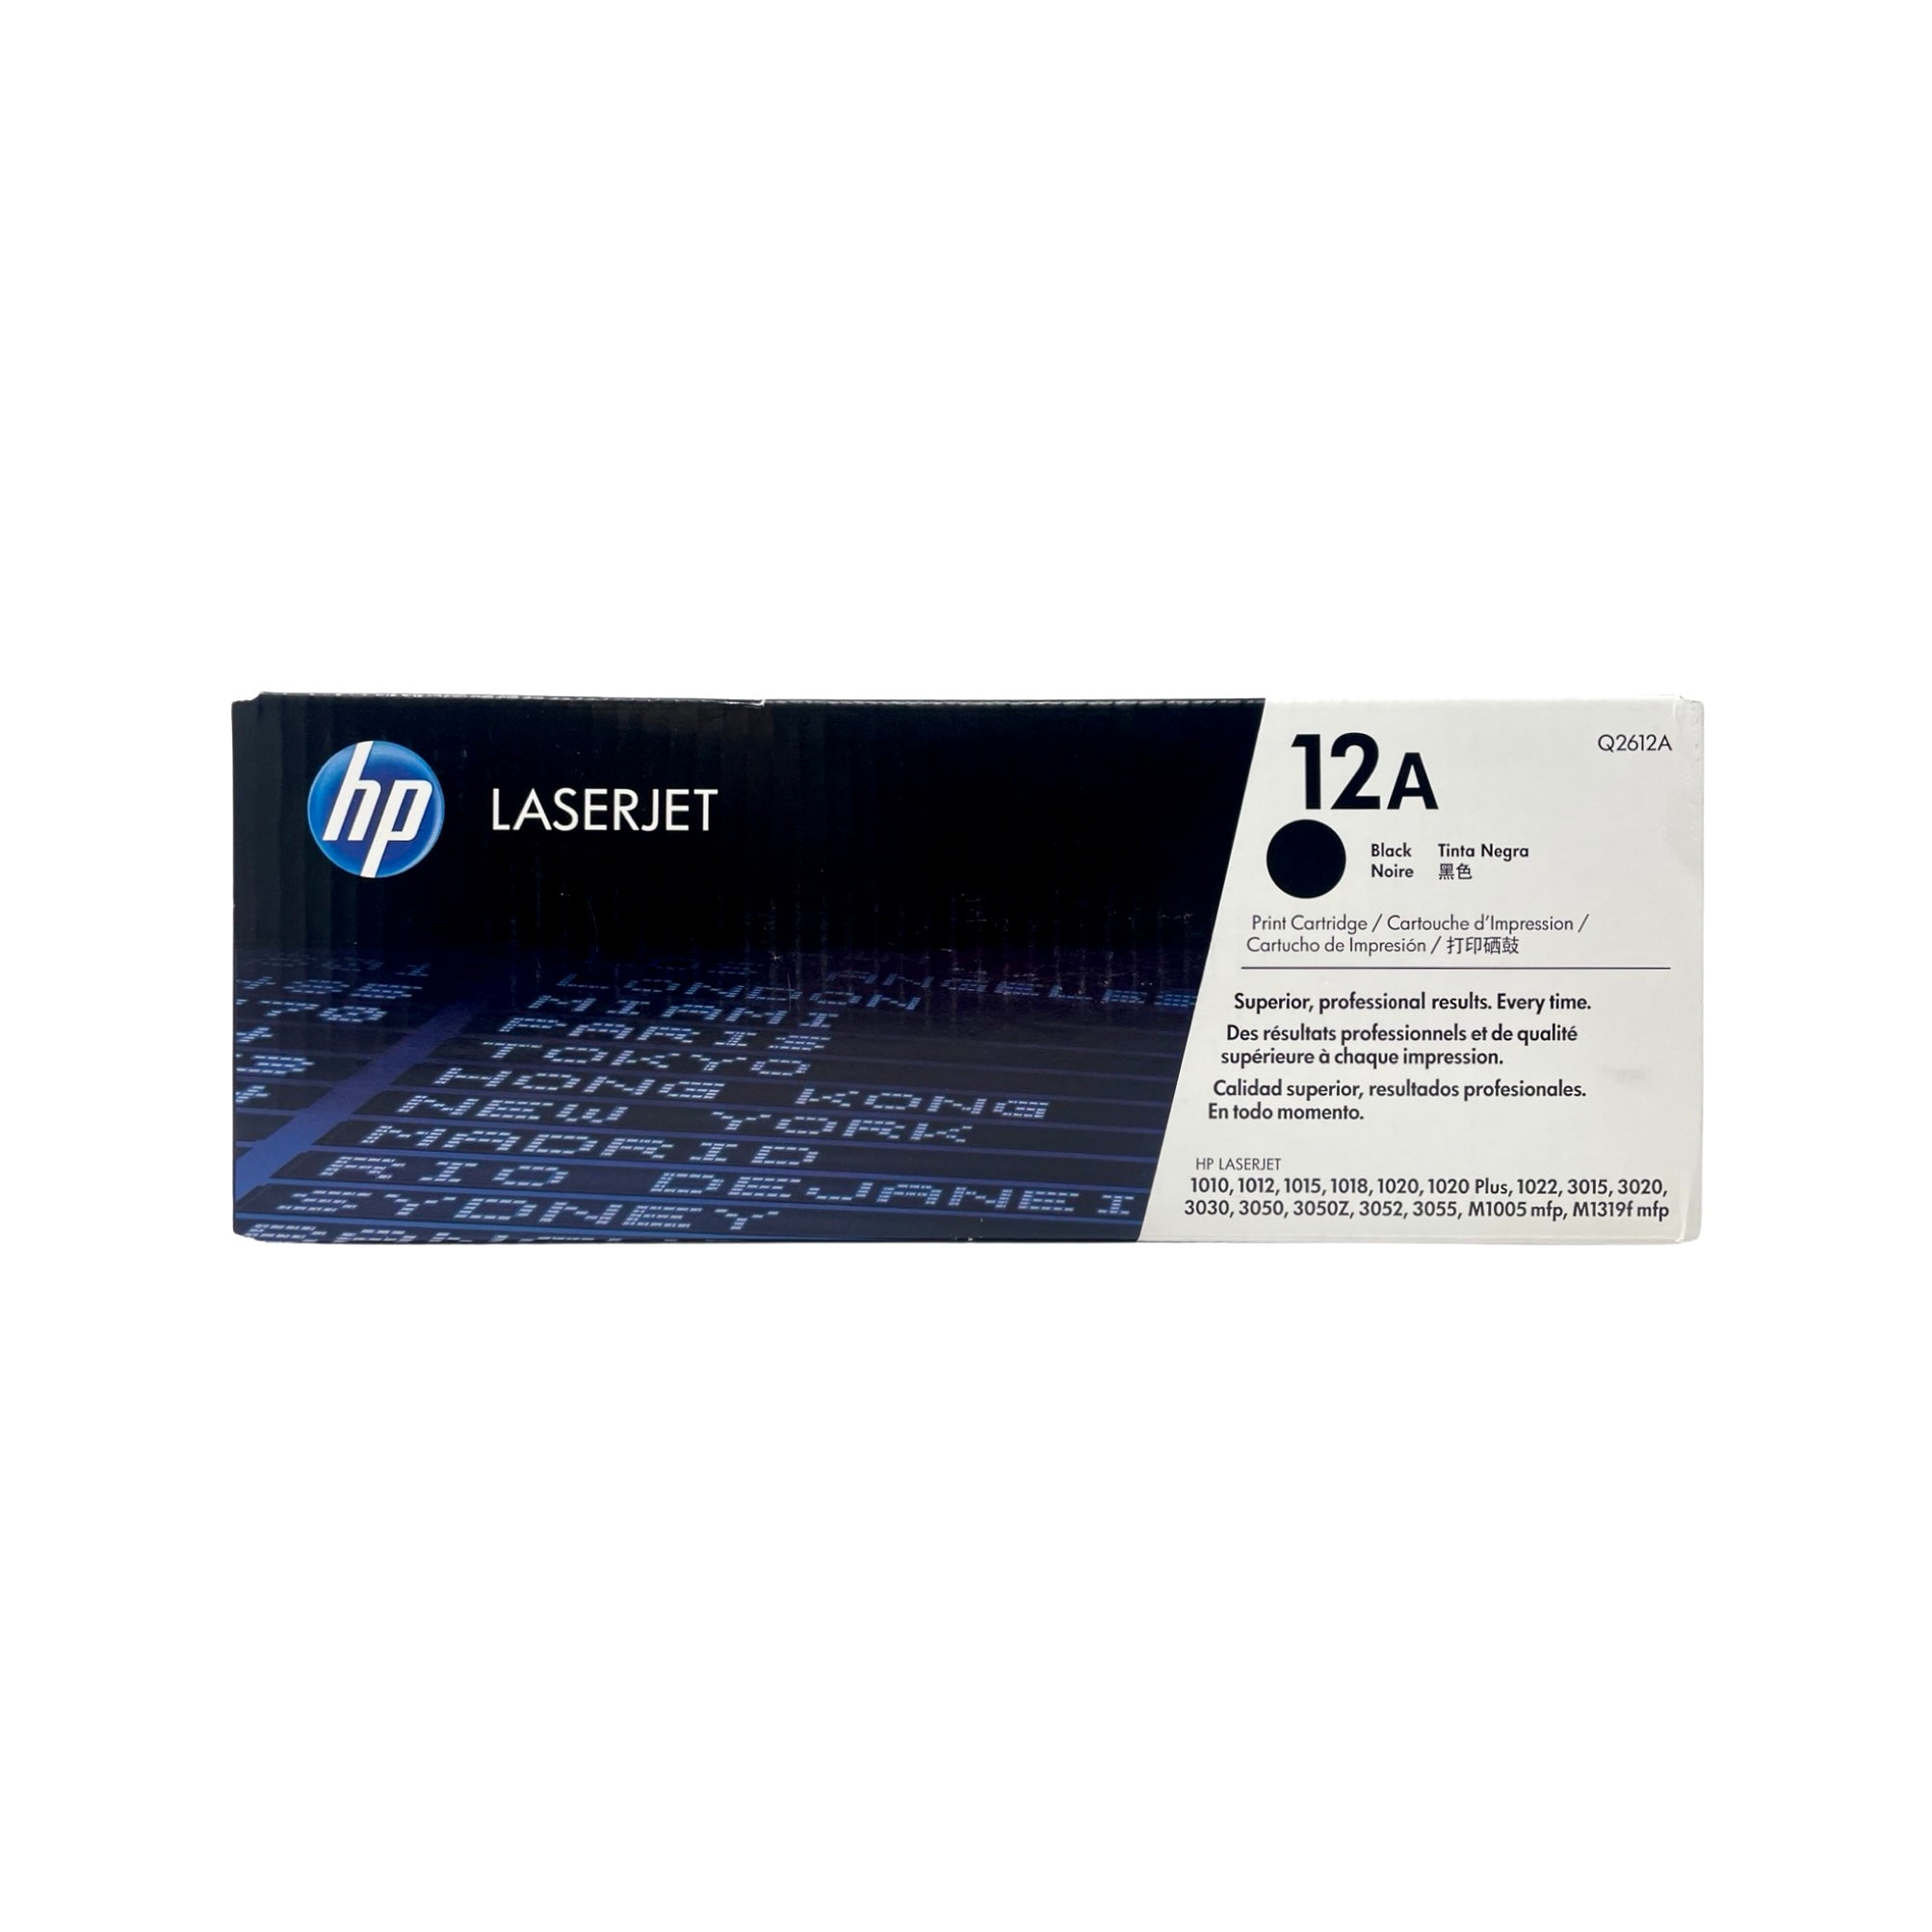 Discount HP LaserJet 1012 Cartridges | HP Printer Toner Cartridges